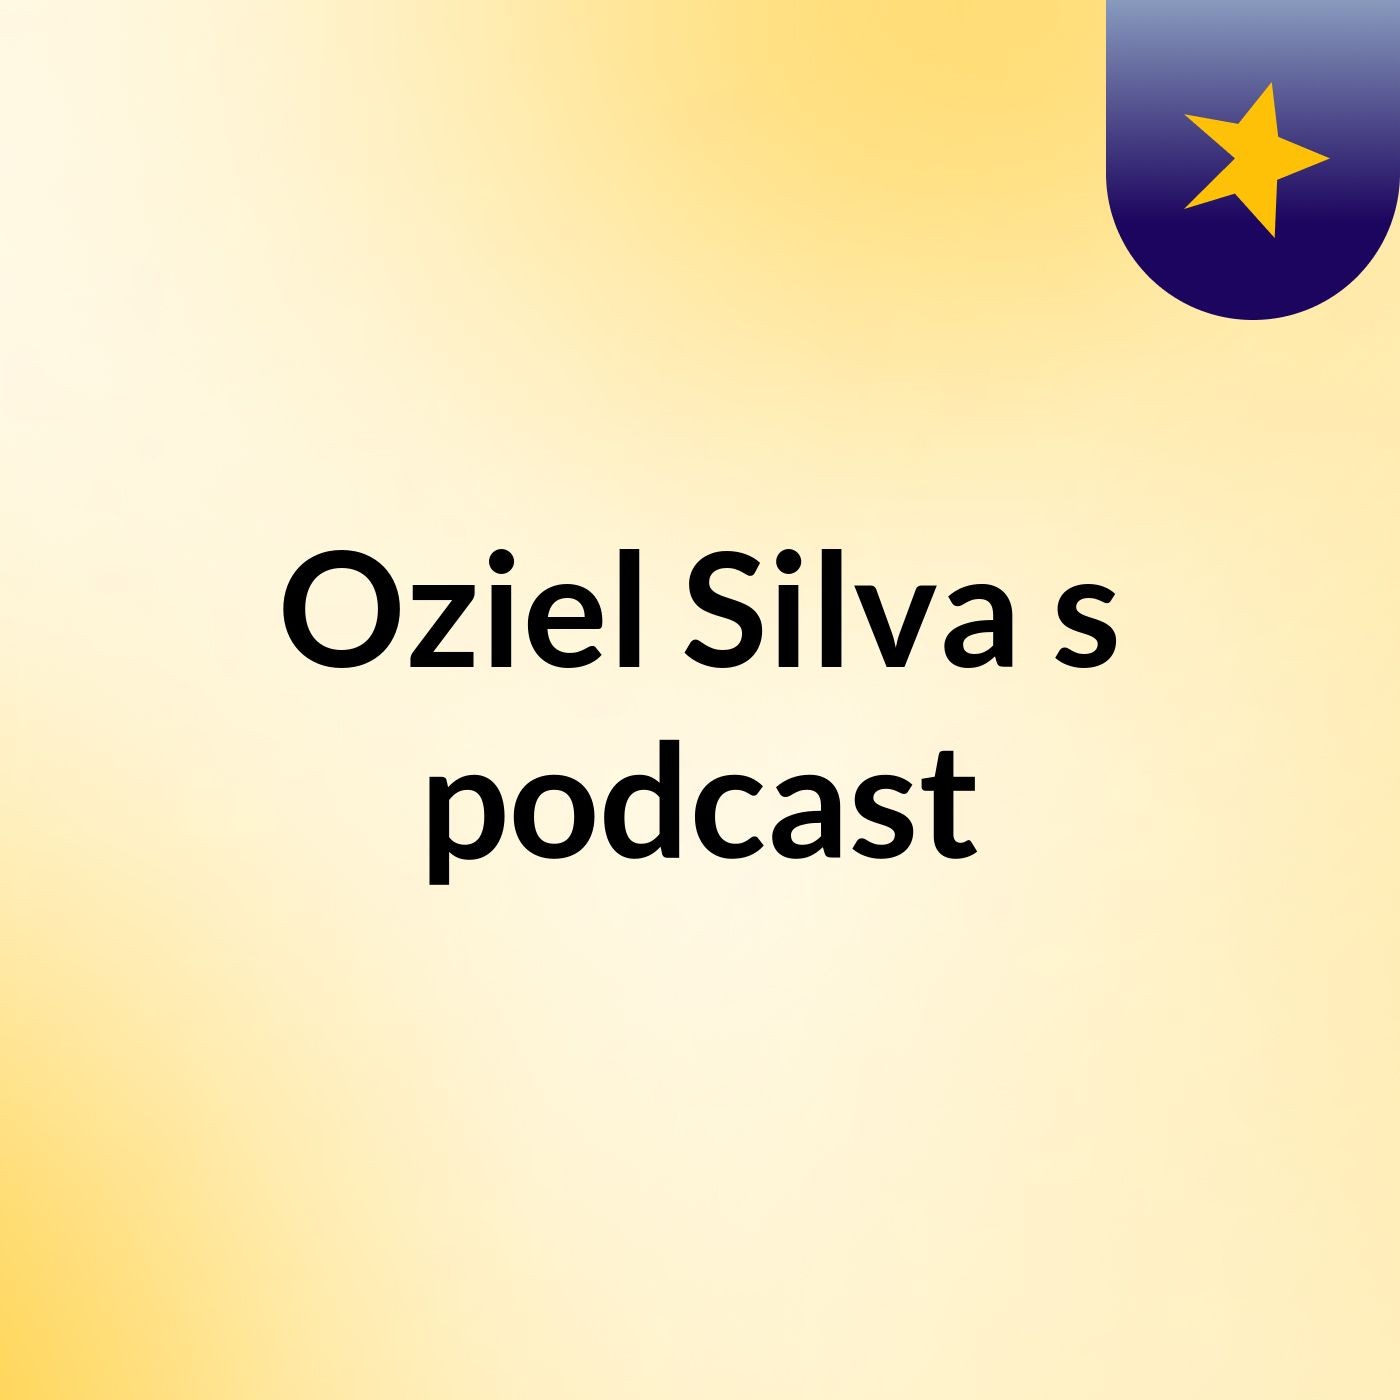 Oziel Silva's podcast